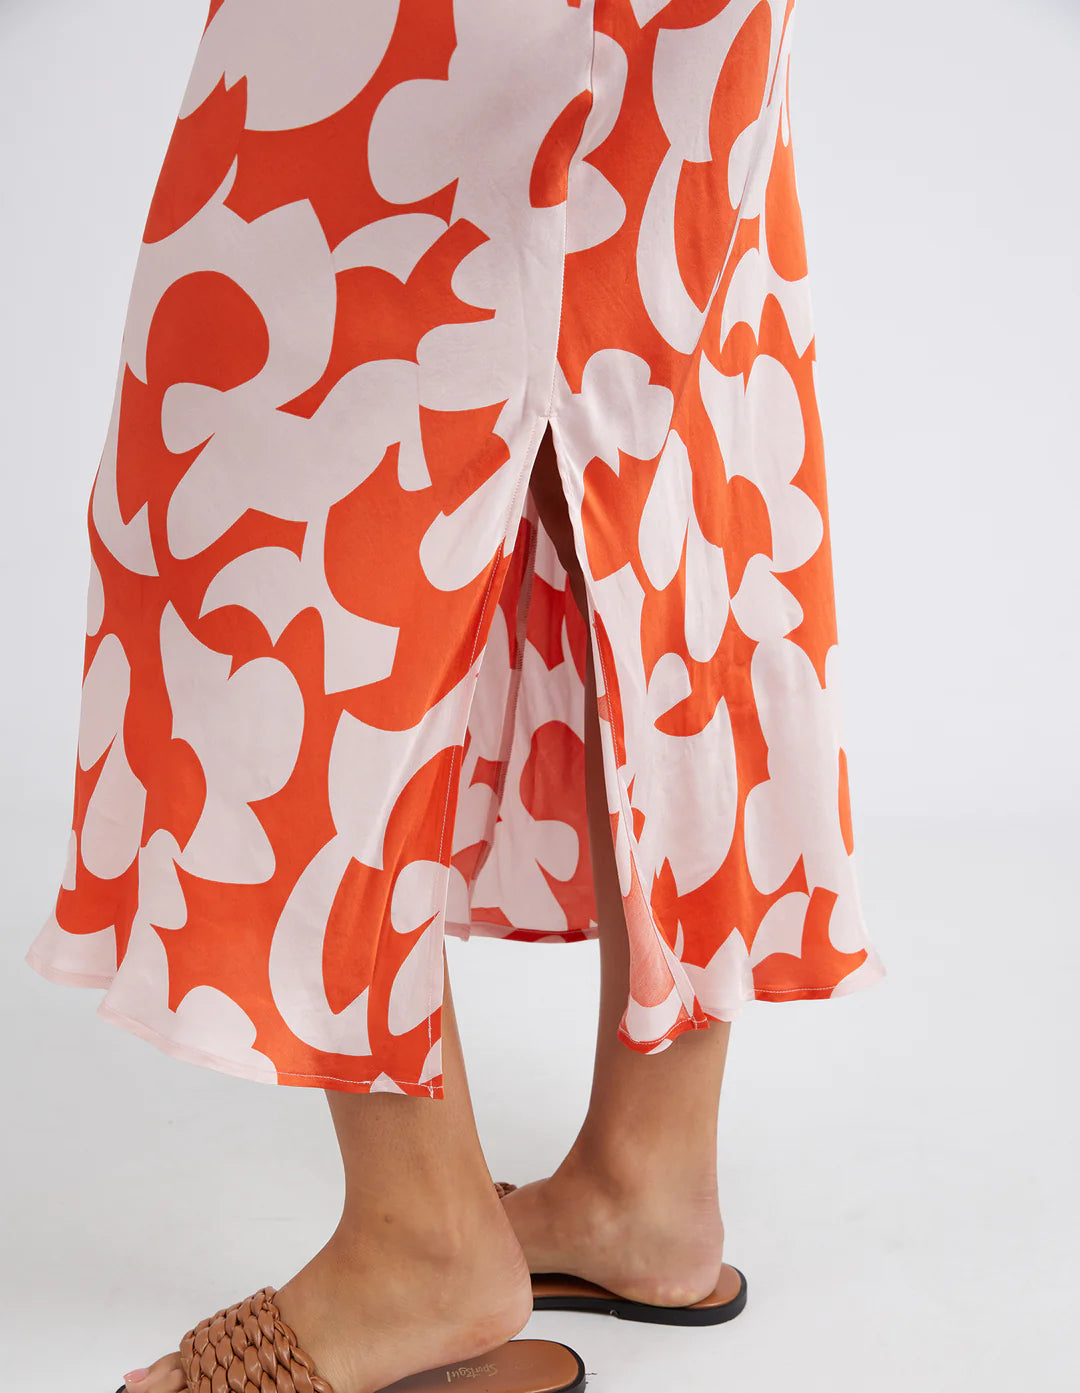 Calypso Skirt - Orange